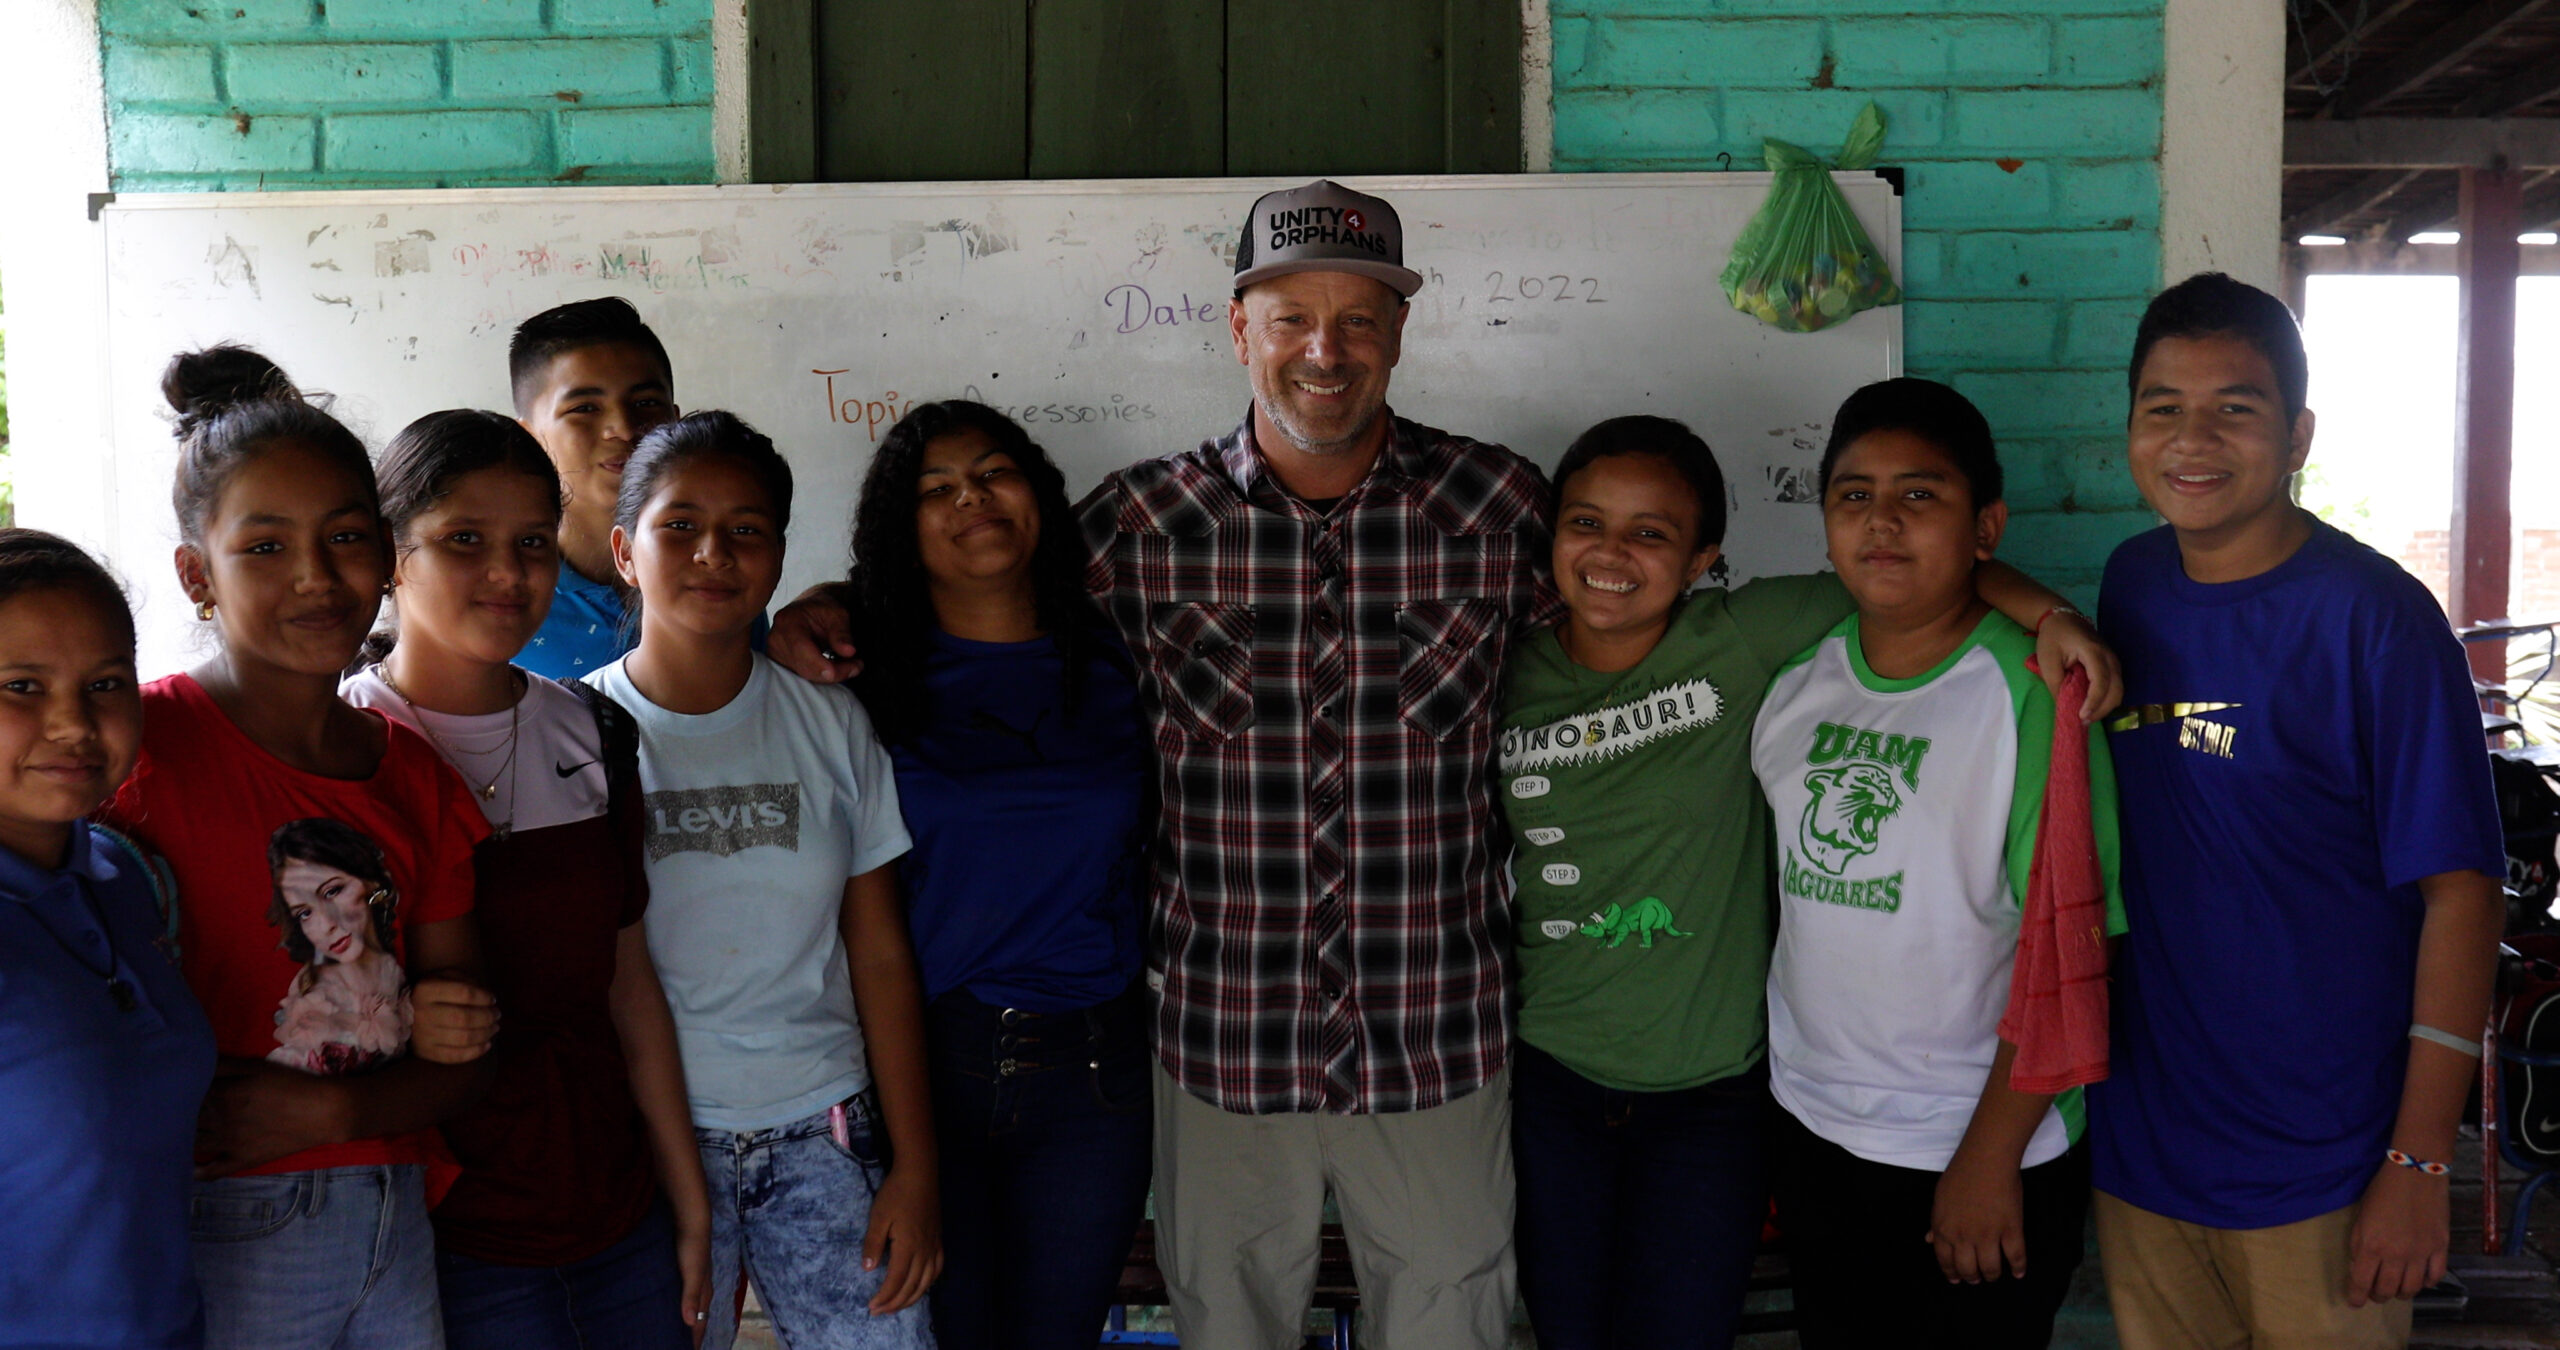 San Diego charity Unity 4 Orphans’ founder Joe Brandi with ESL students in Nicaragua